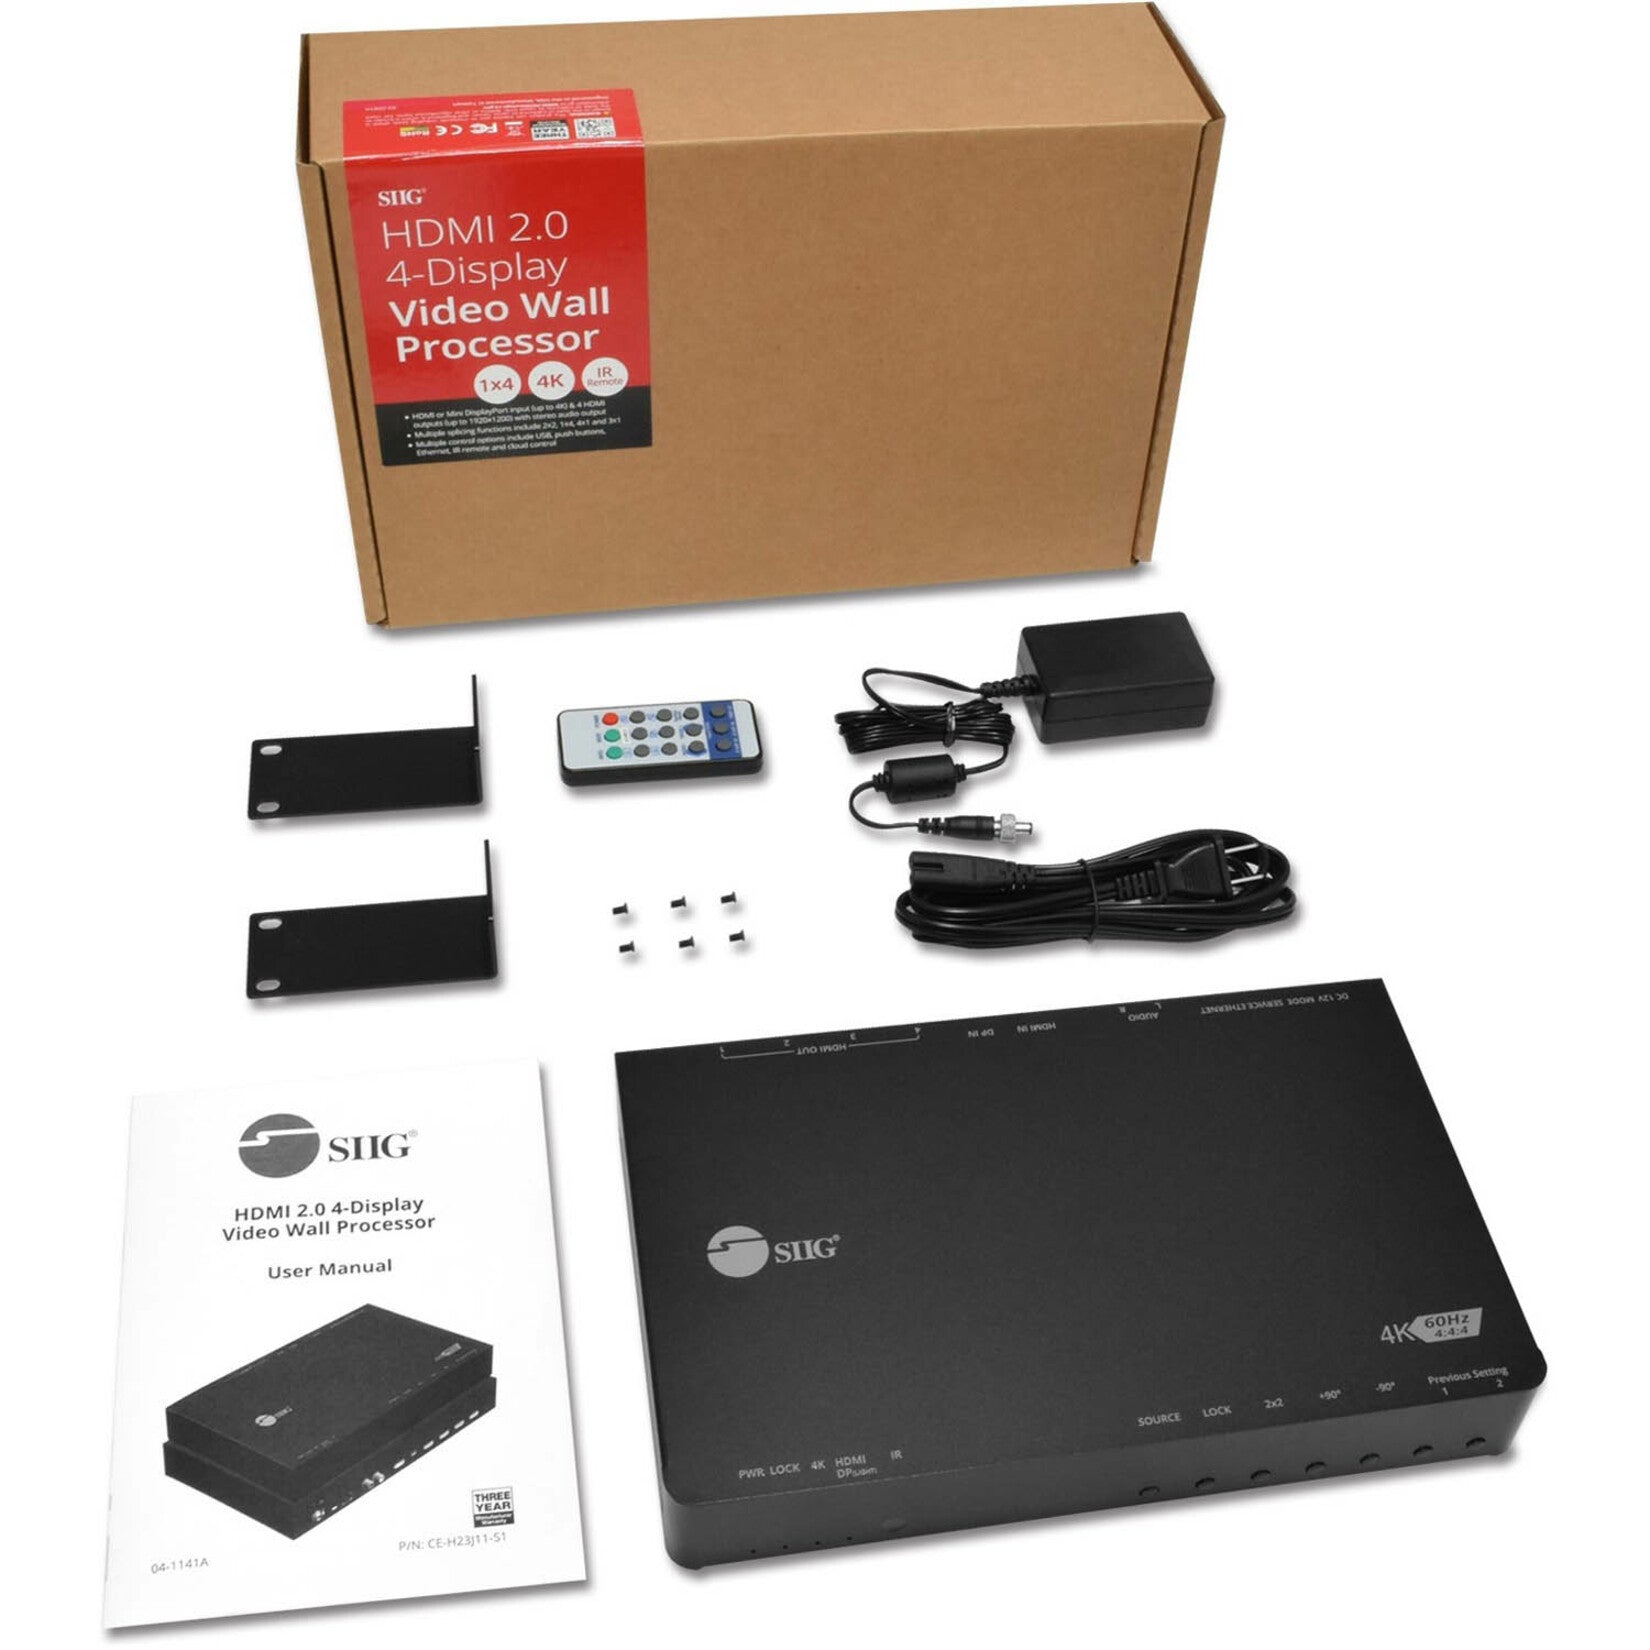 SIIG CE-H23J11-S1 HDMI 2.0 4-Display Video Wall Processor, 1080p, 3 Year Warranty